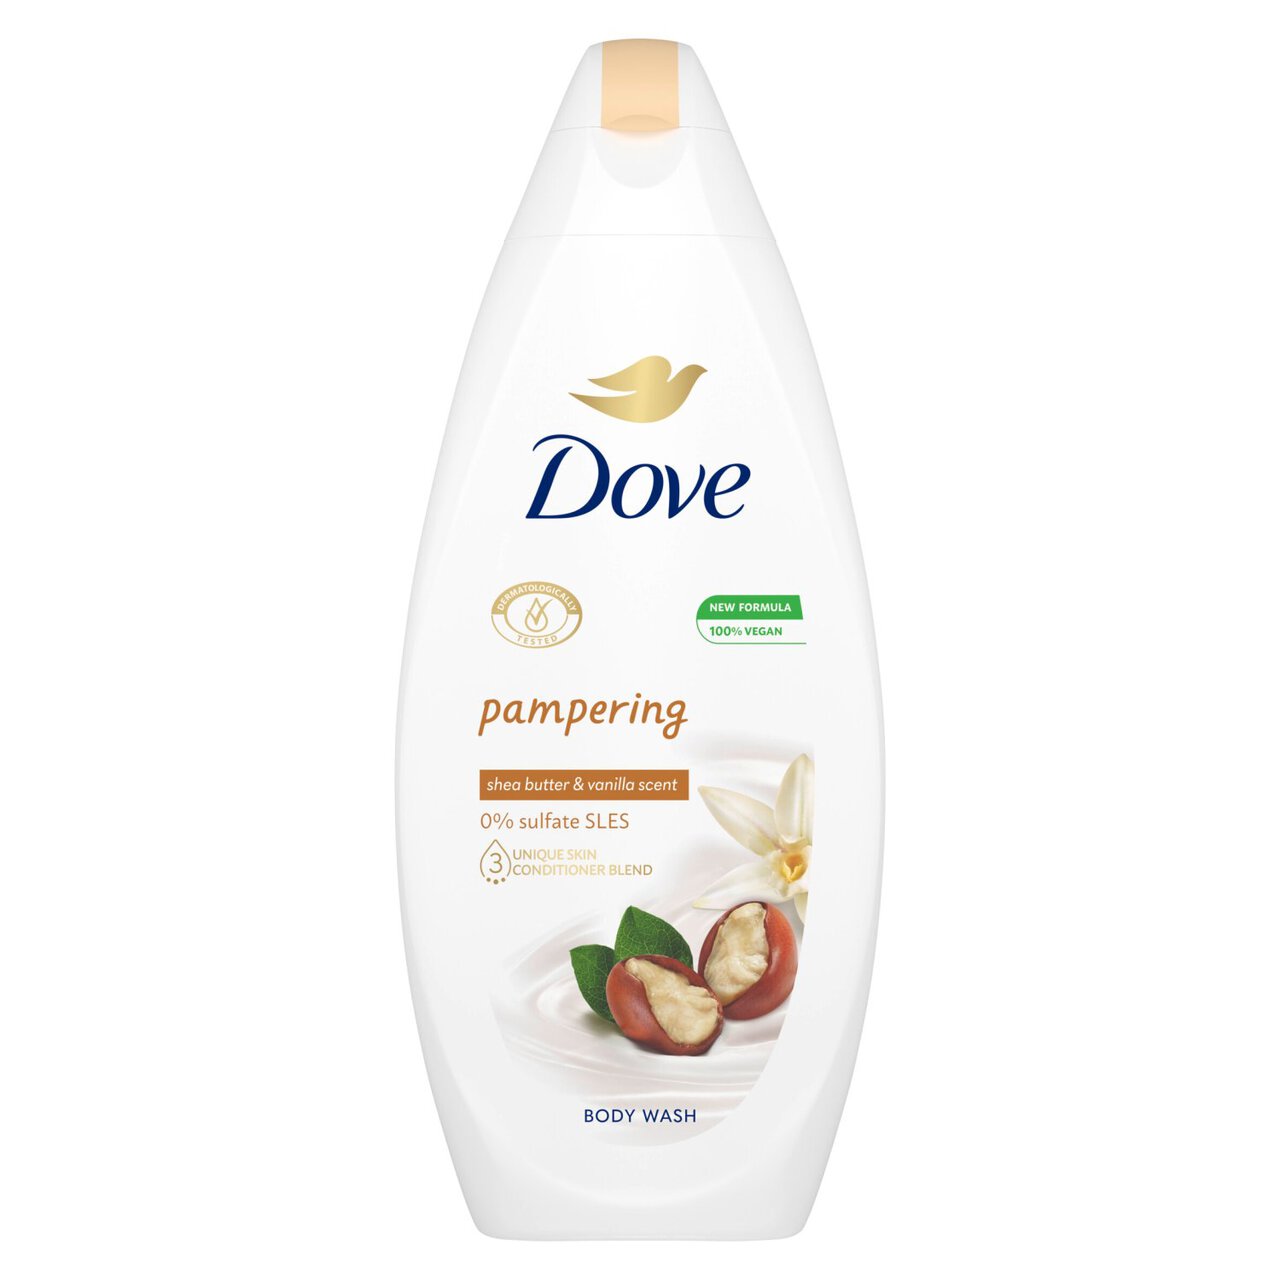 Dove Pampering Shea Butter Body Wash Shower Gel 225ml